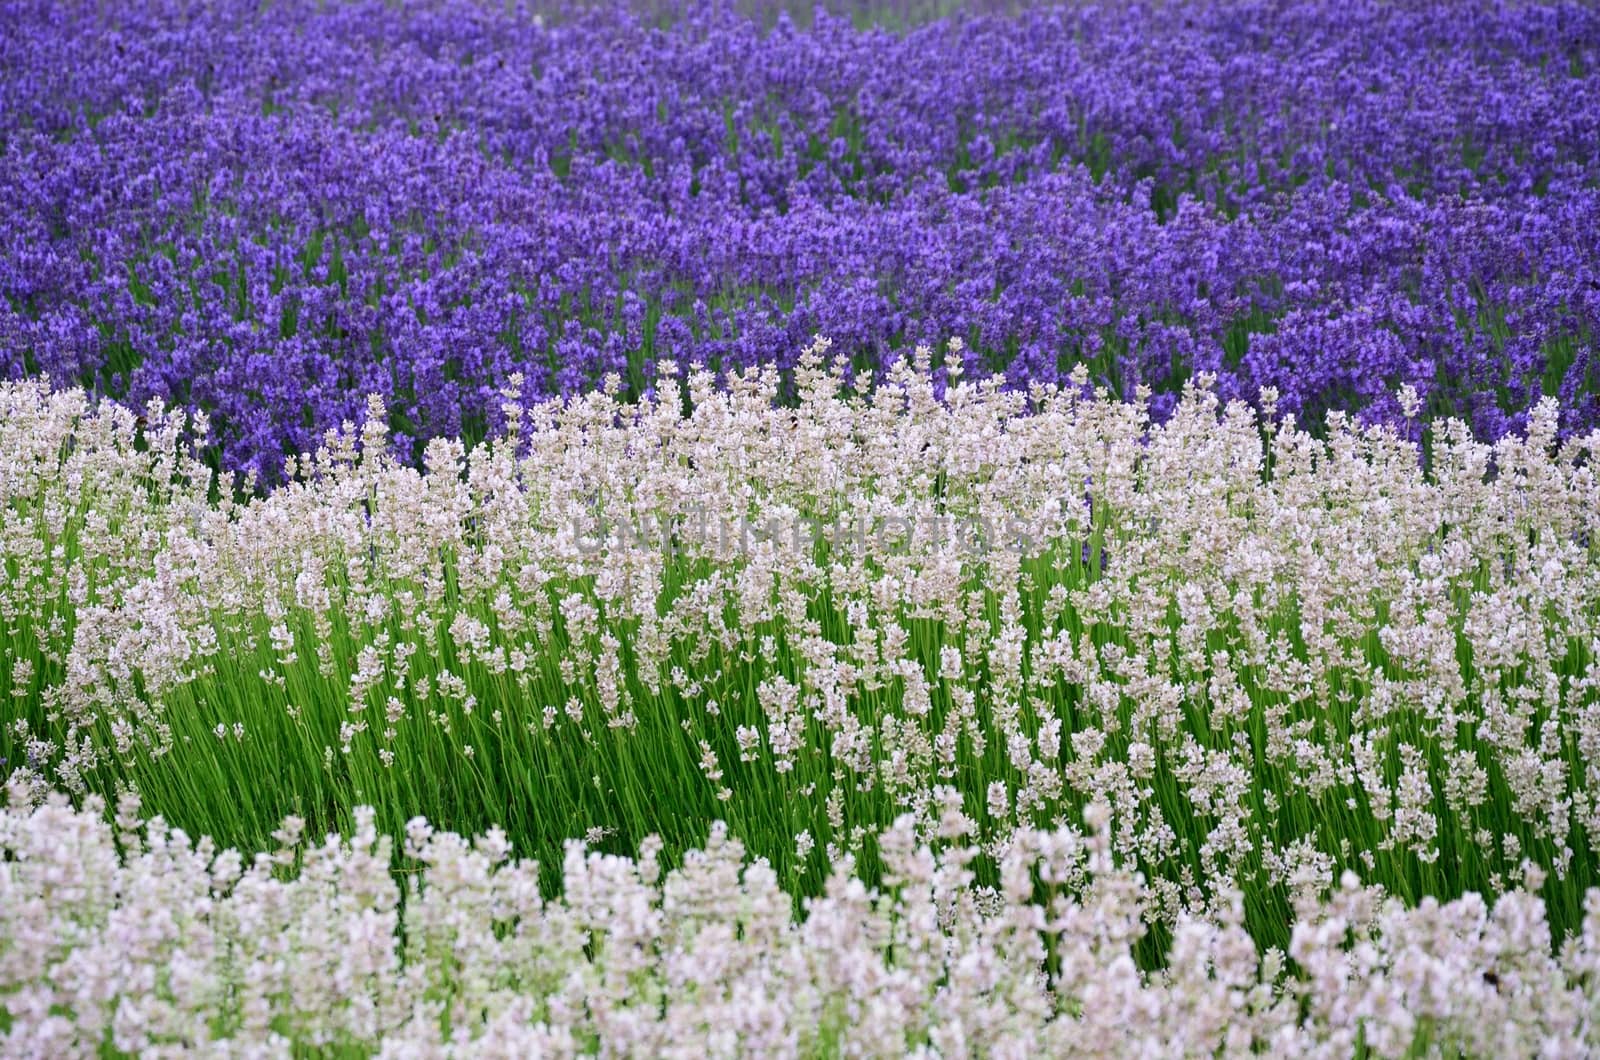 Purple and white lavender in field